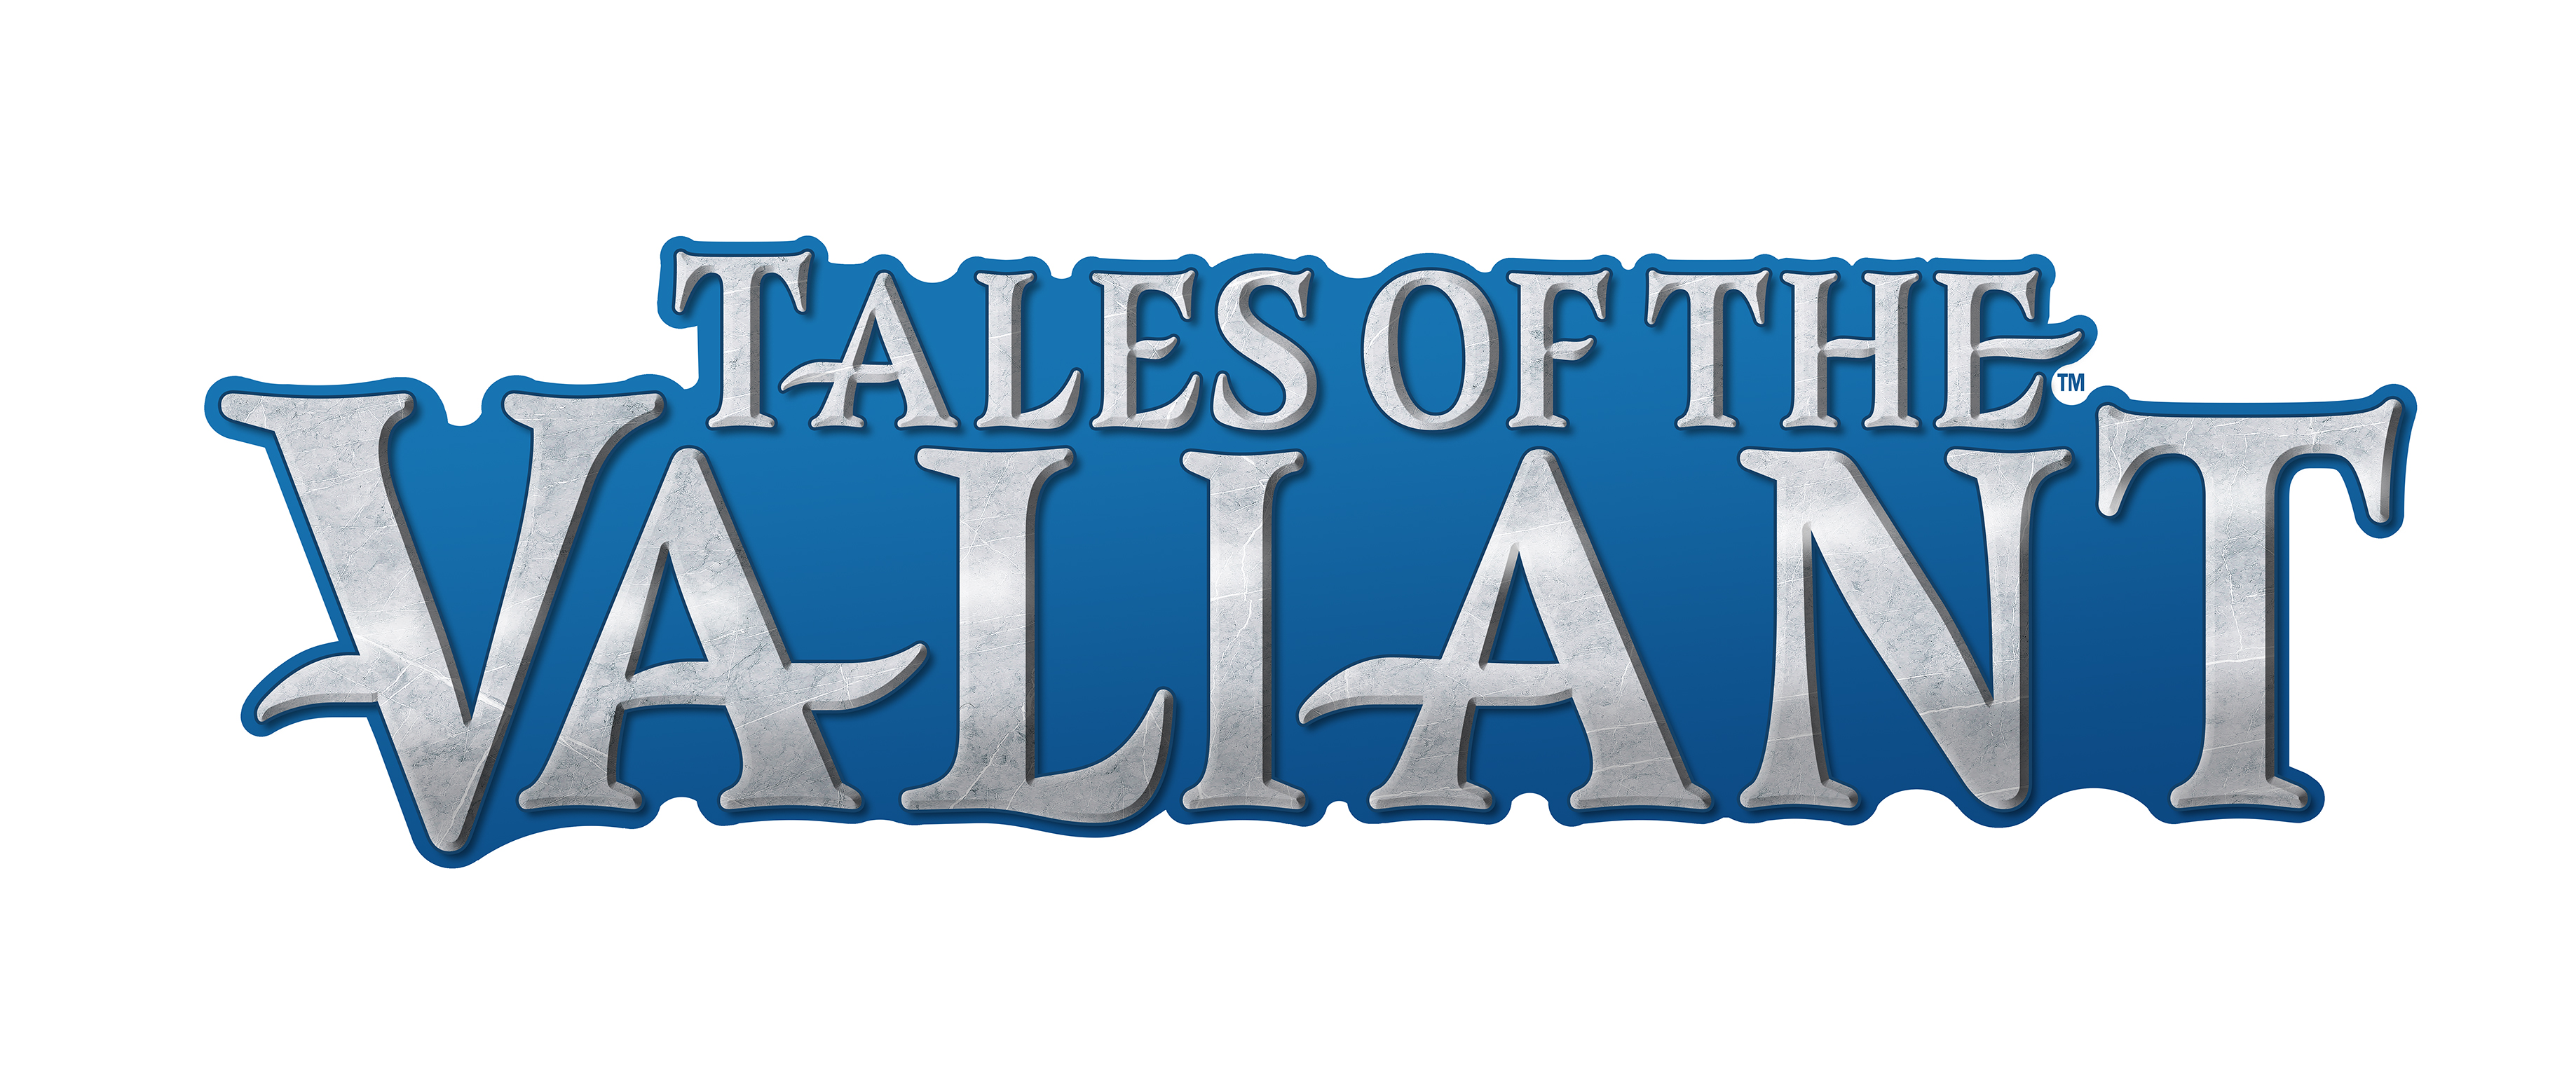 Tales of the Valiant Logo.jpg